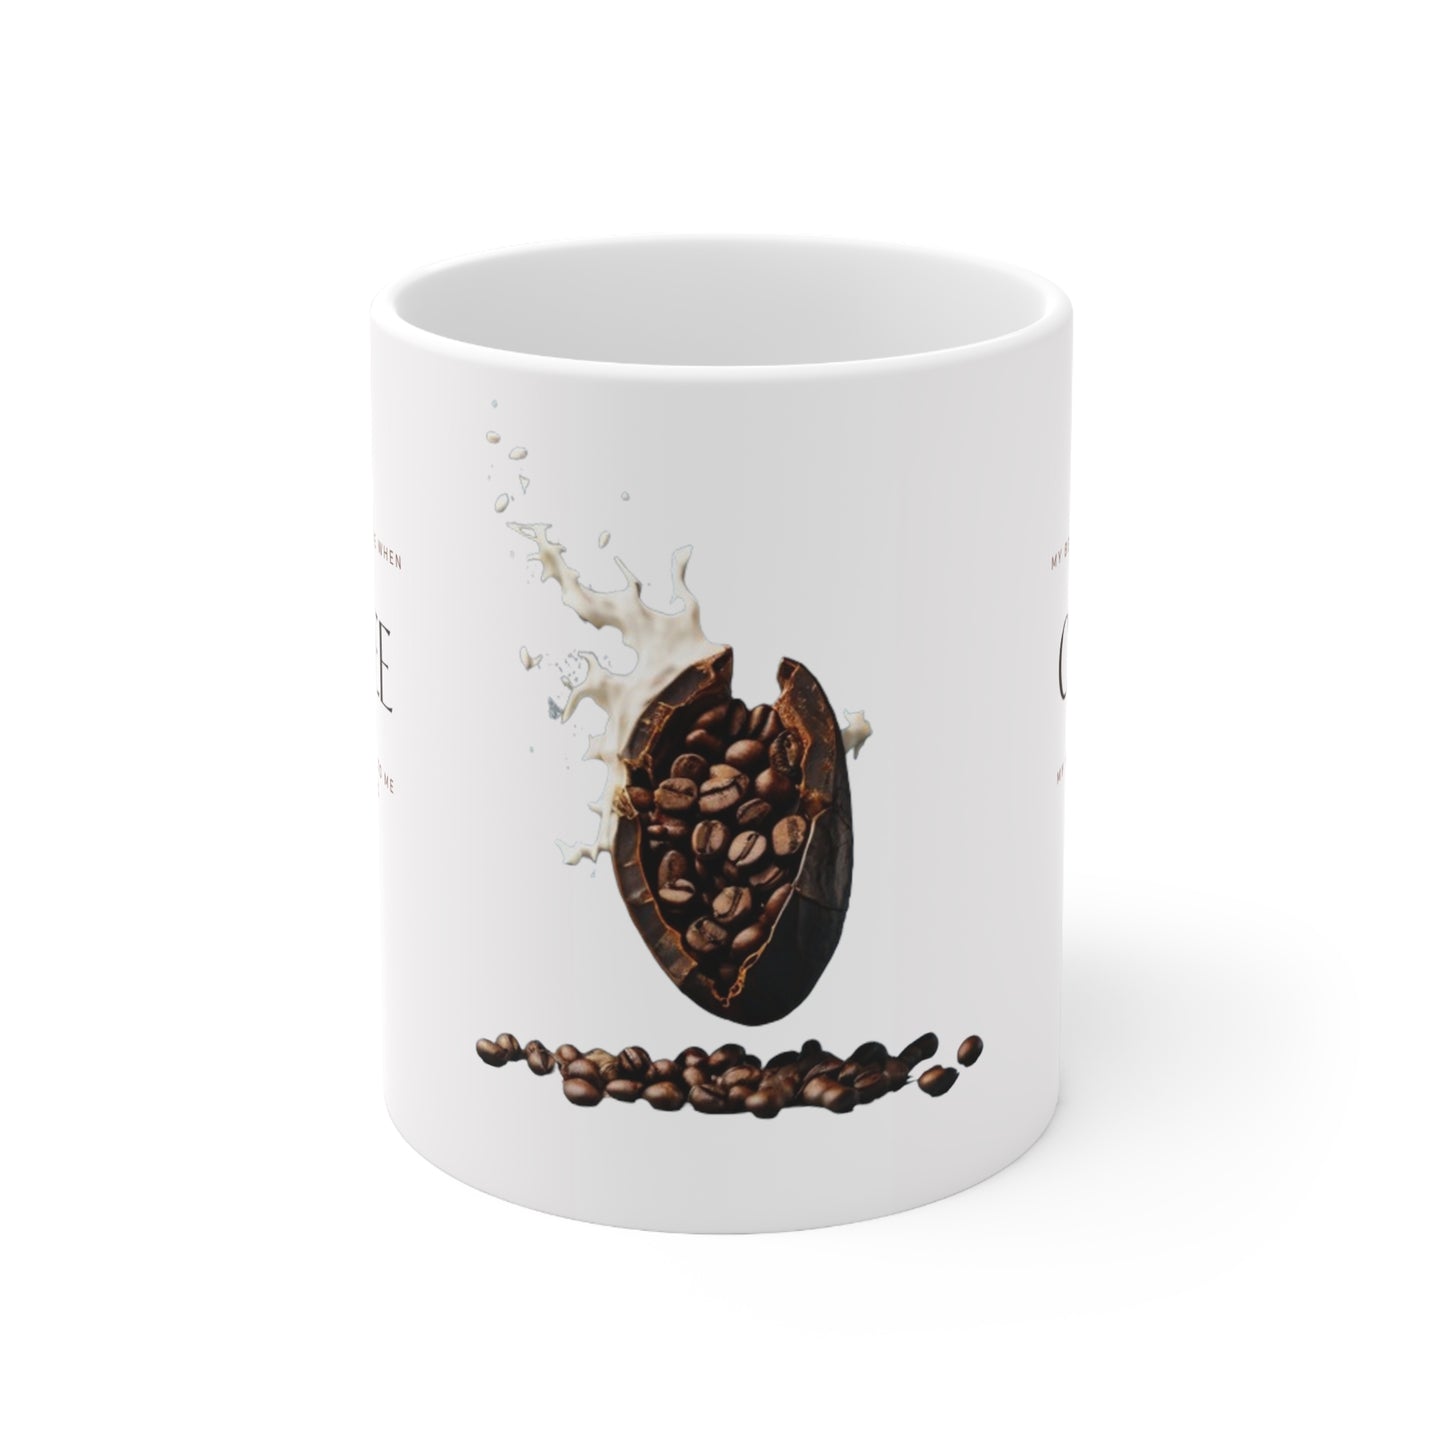 My Best Ideas Come To Me When I'm Drinking Coffee Mug - Ceramic Coffee Mug, 11oz